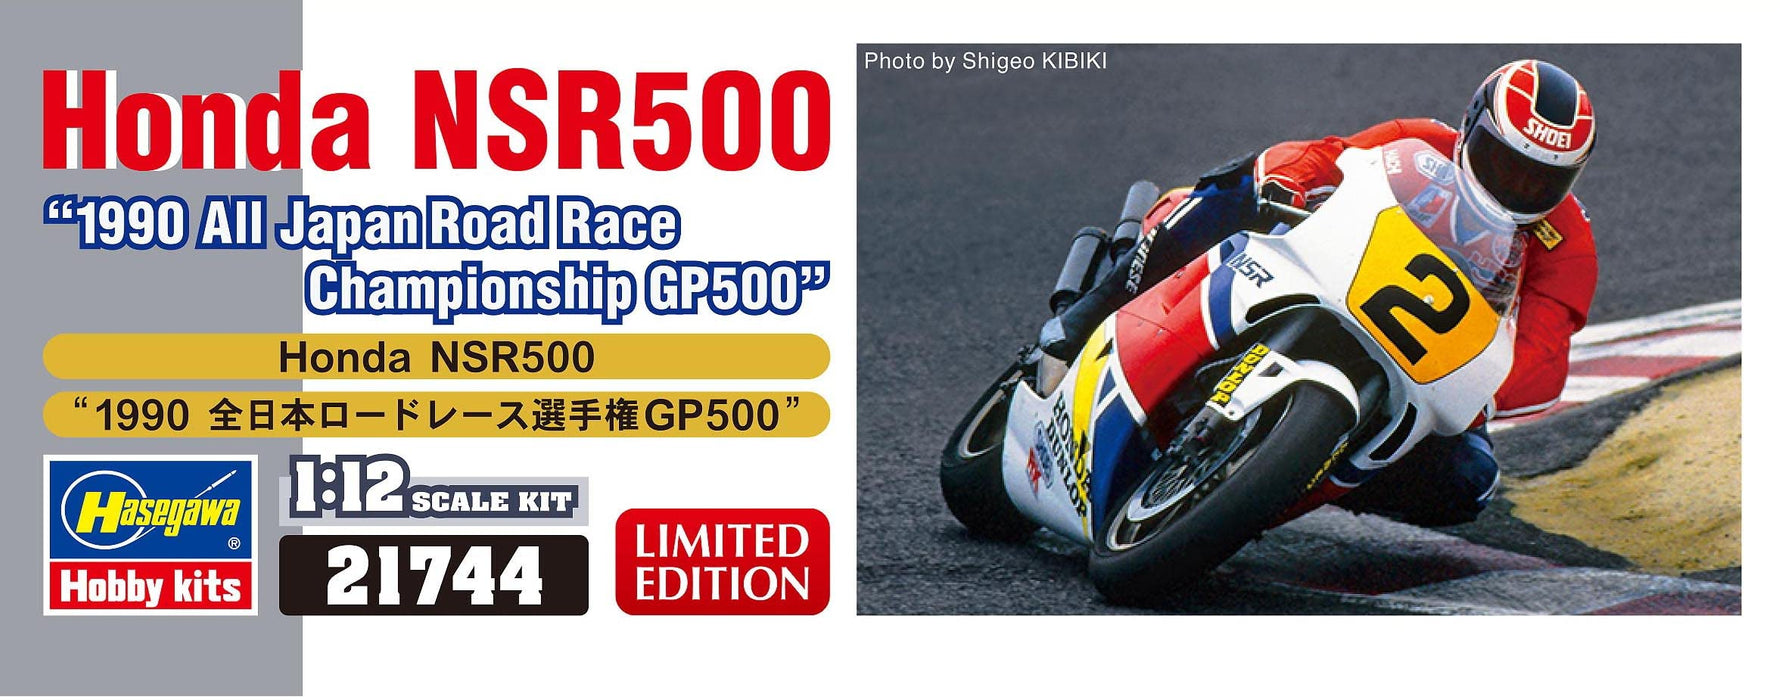 HASEGAWA 1/12 Honda Nsr500 1990 All Japan Road Race Championship Plastic Model